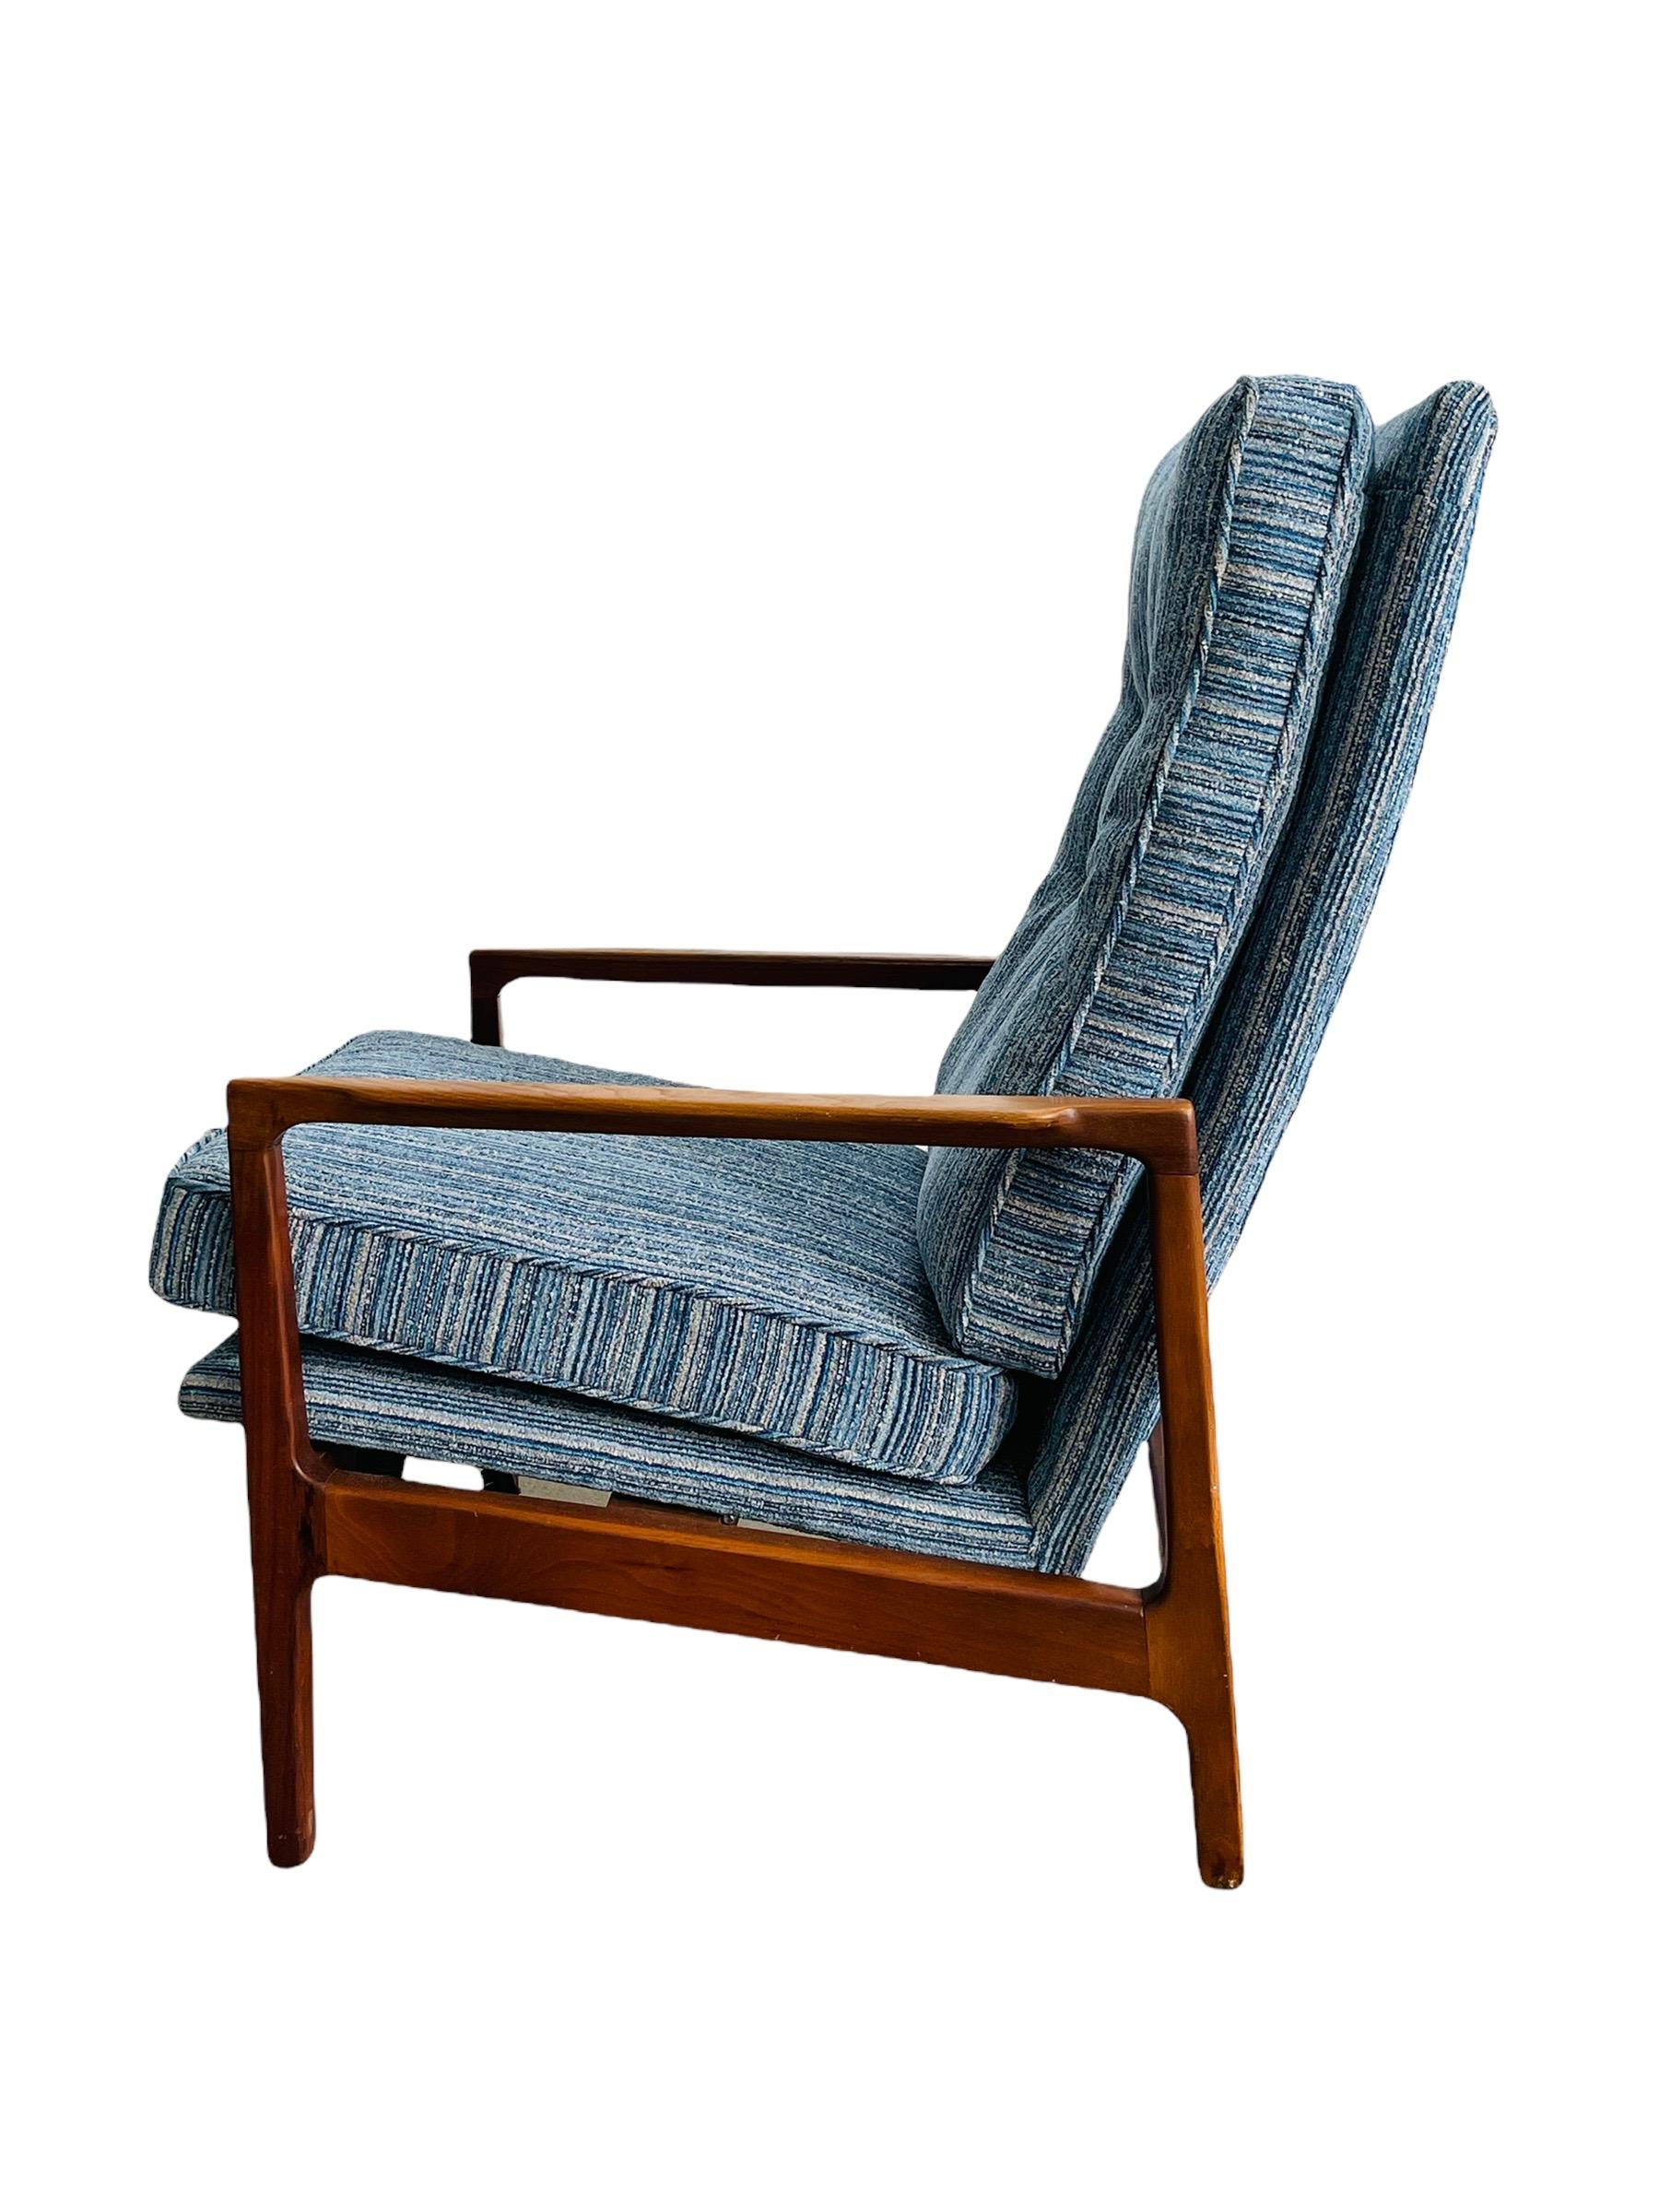 Fabric Milo Baughman Reclining Lounge Chair & Ottoman for James Inc